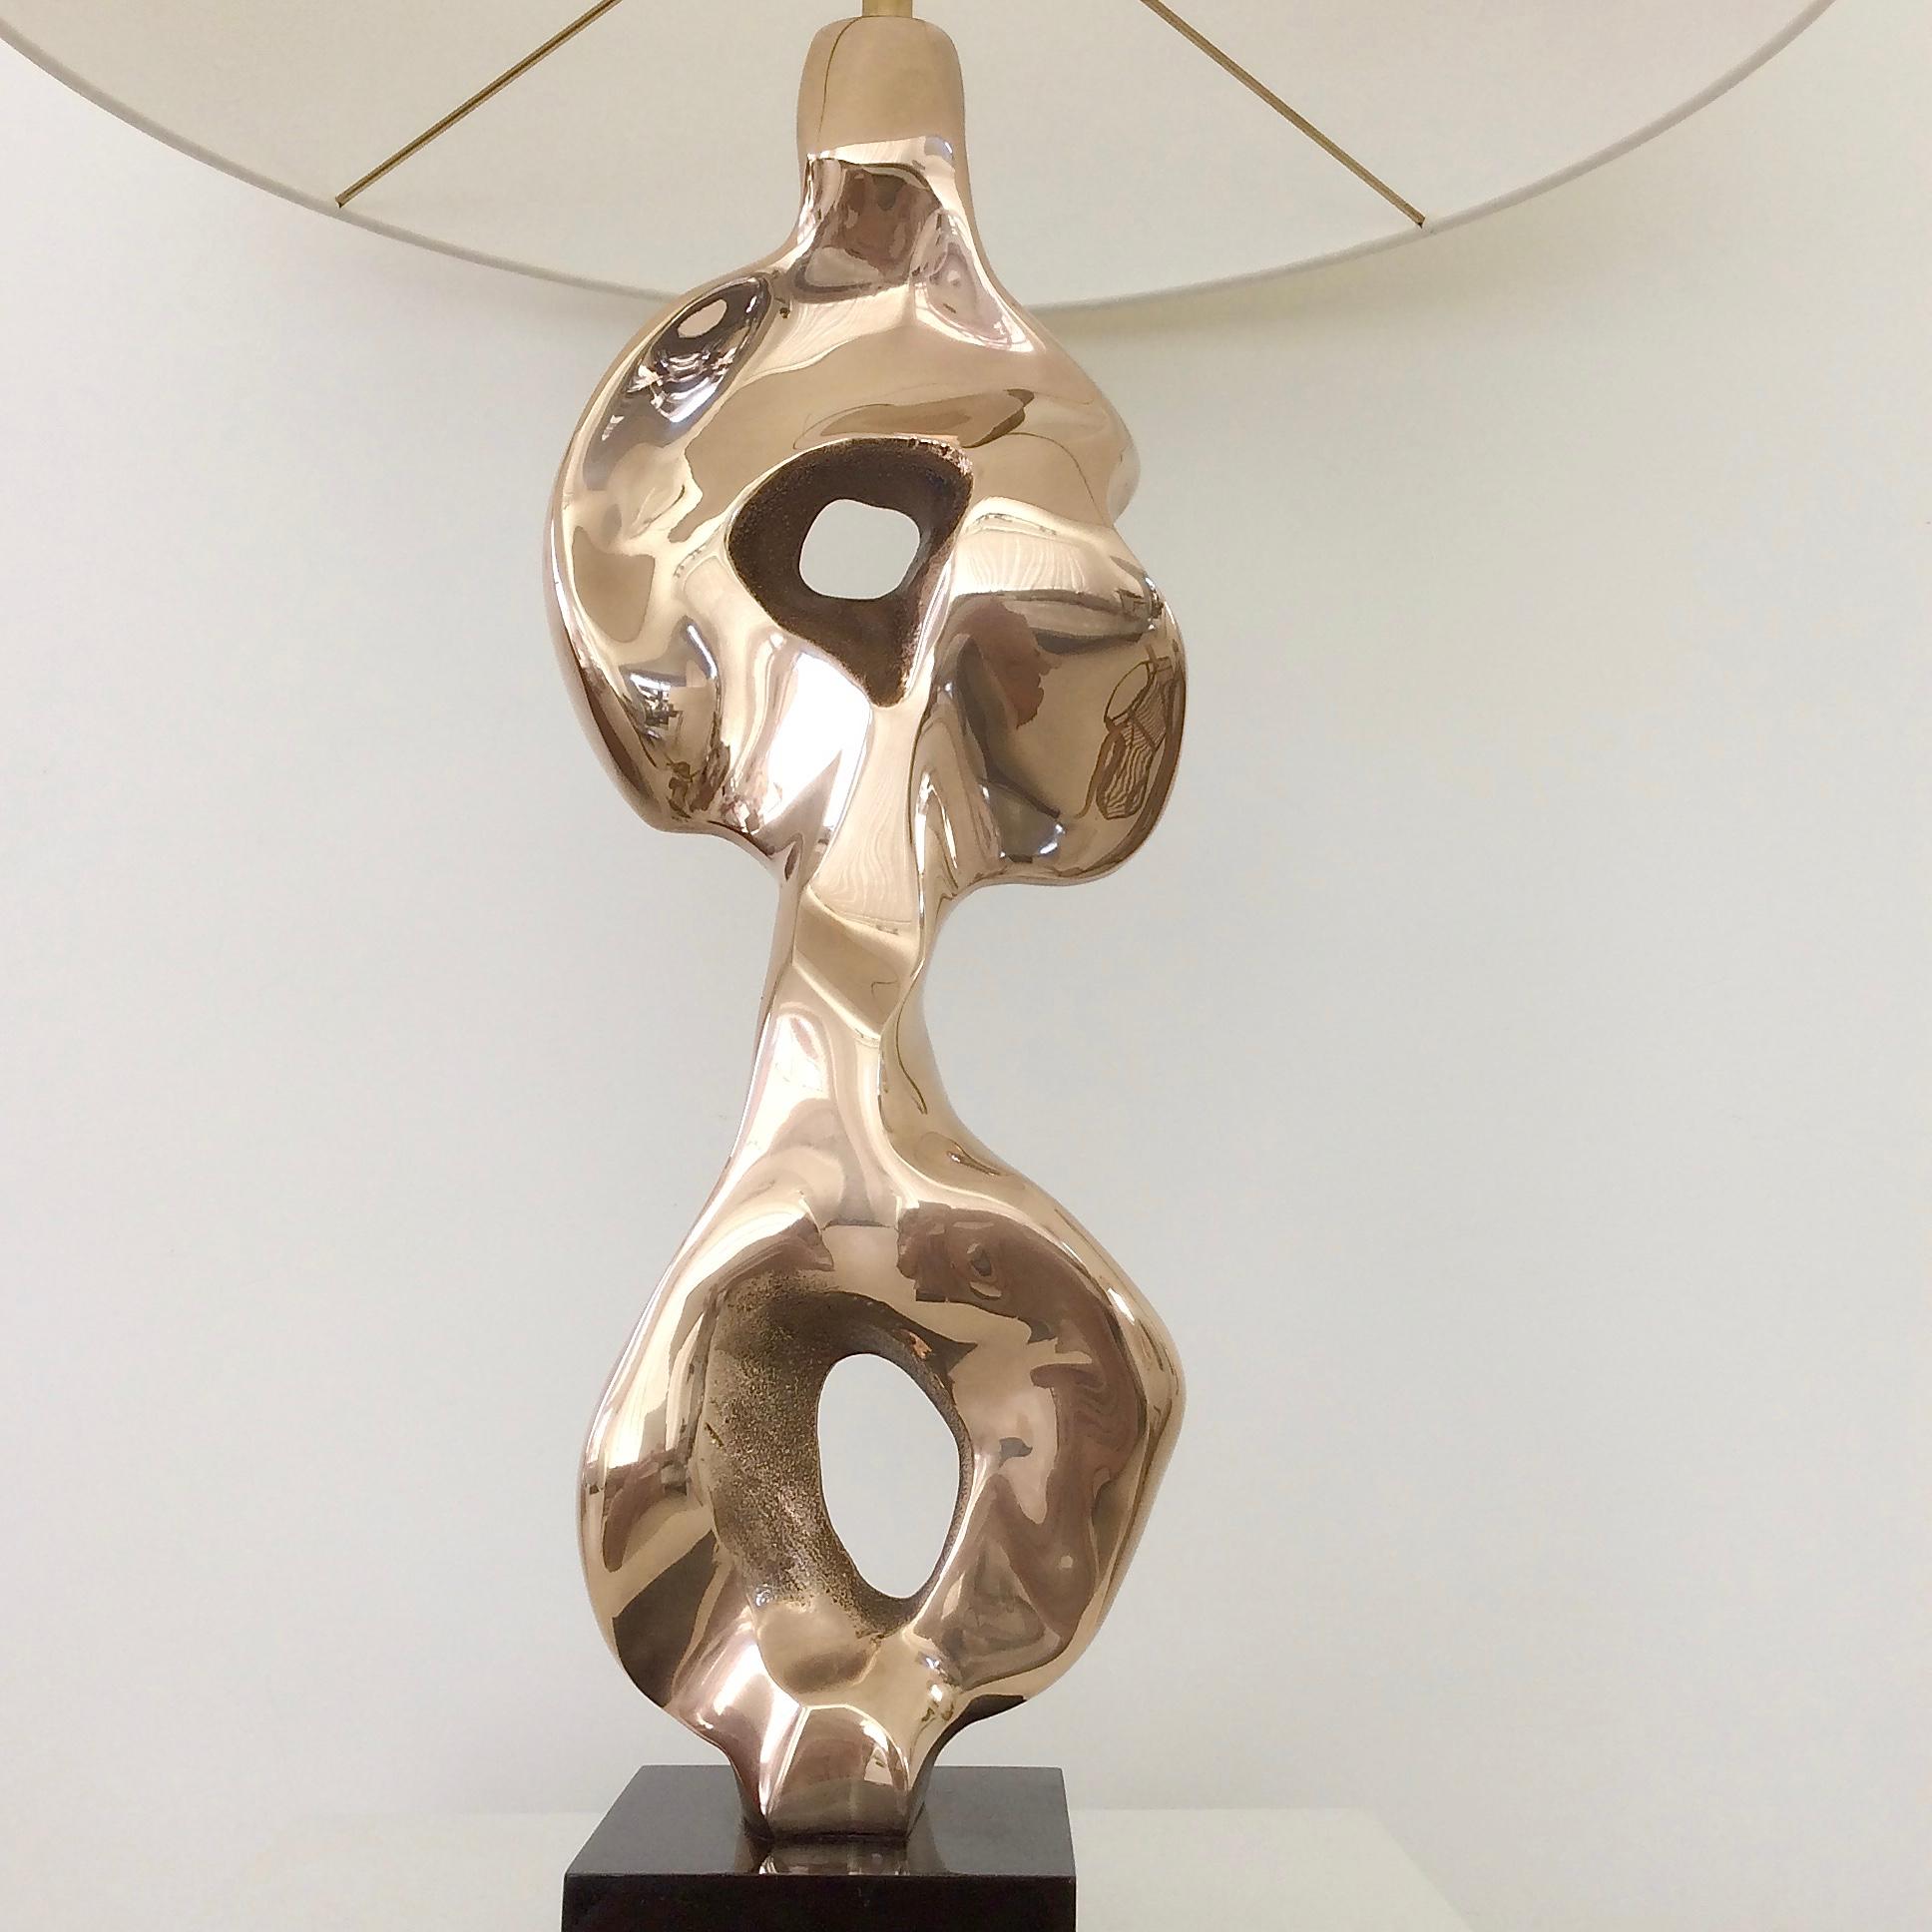 French Michel Jaubert Sculptural Bronze Table Lamp, circa 1975, France